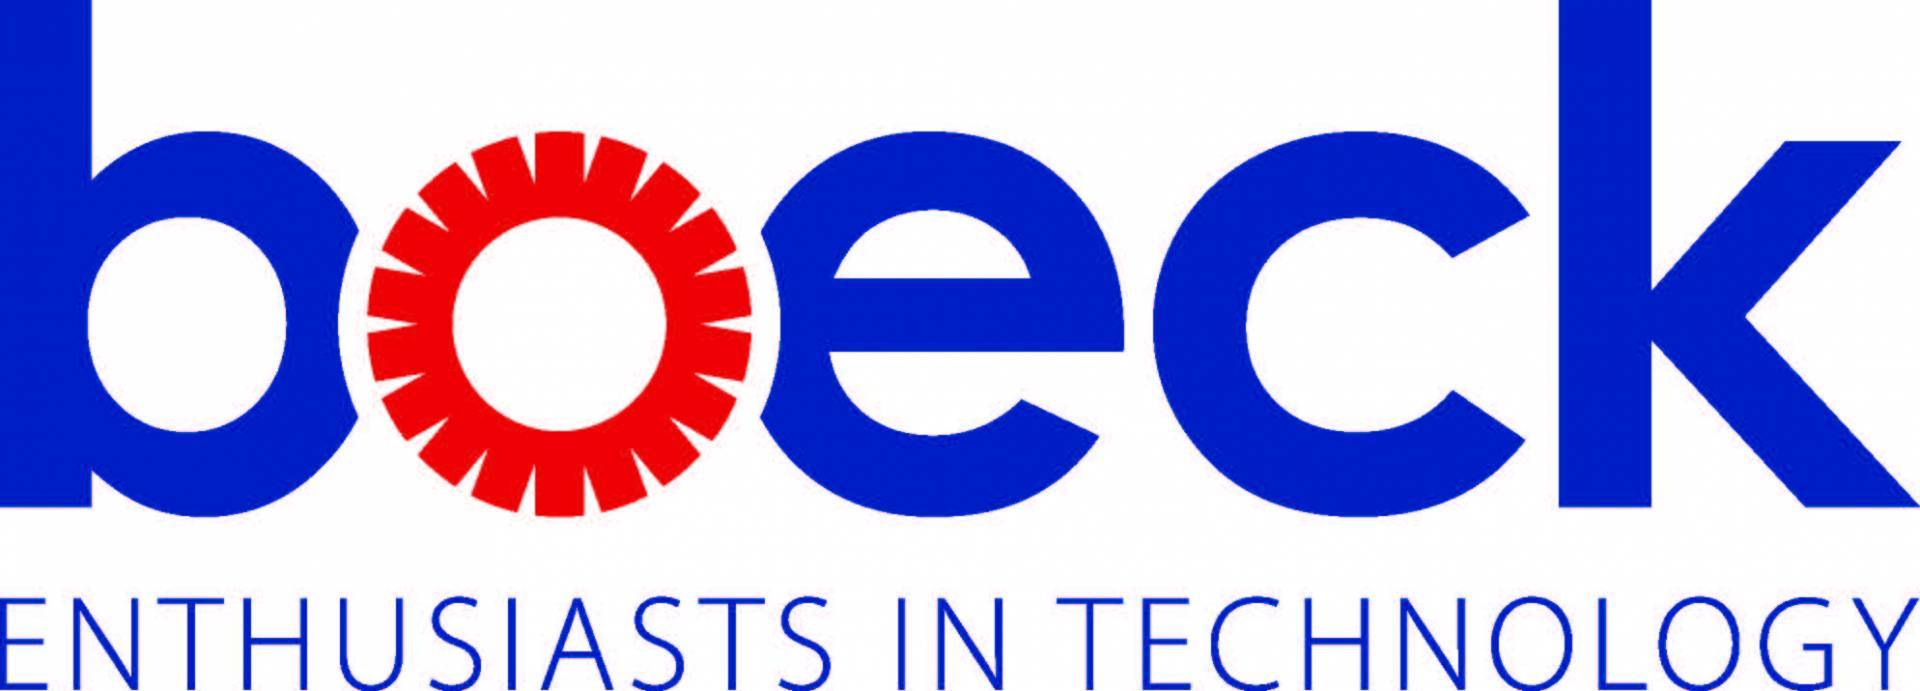 Boeck Technology Logo